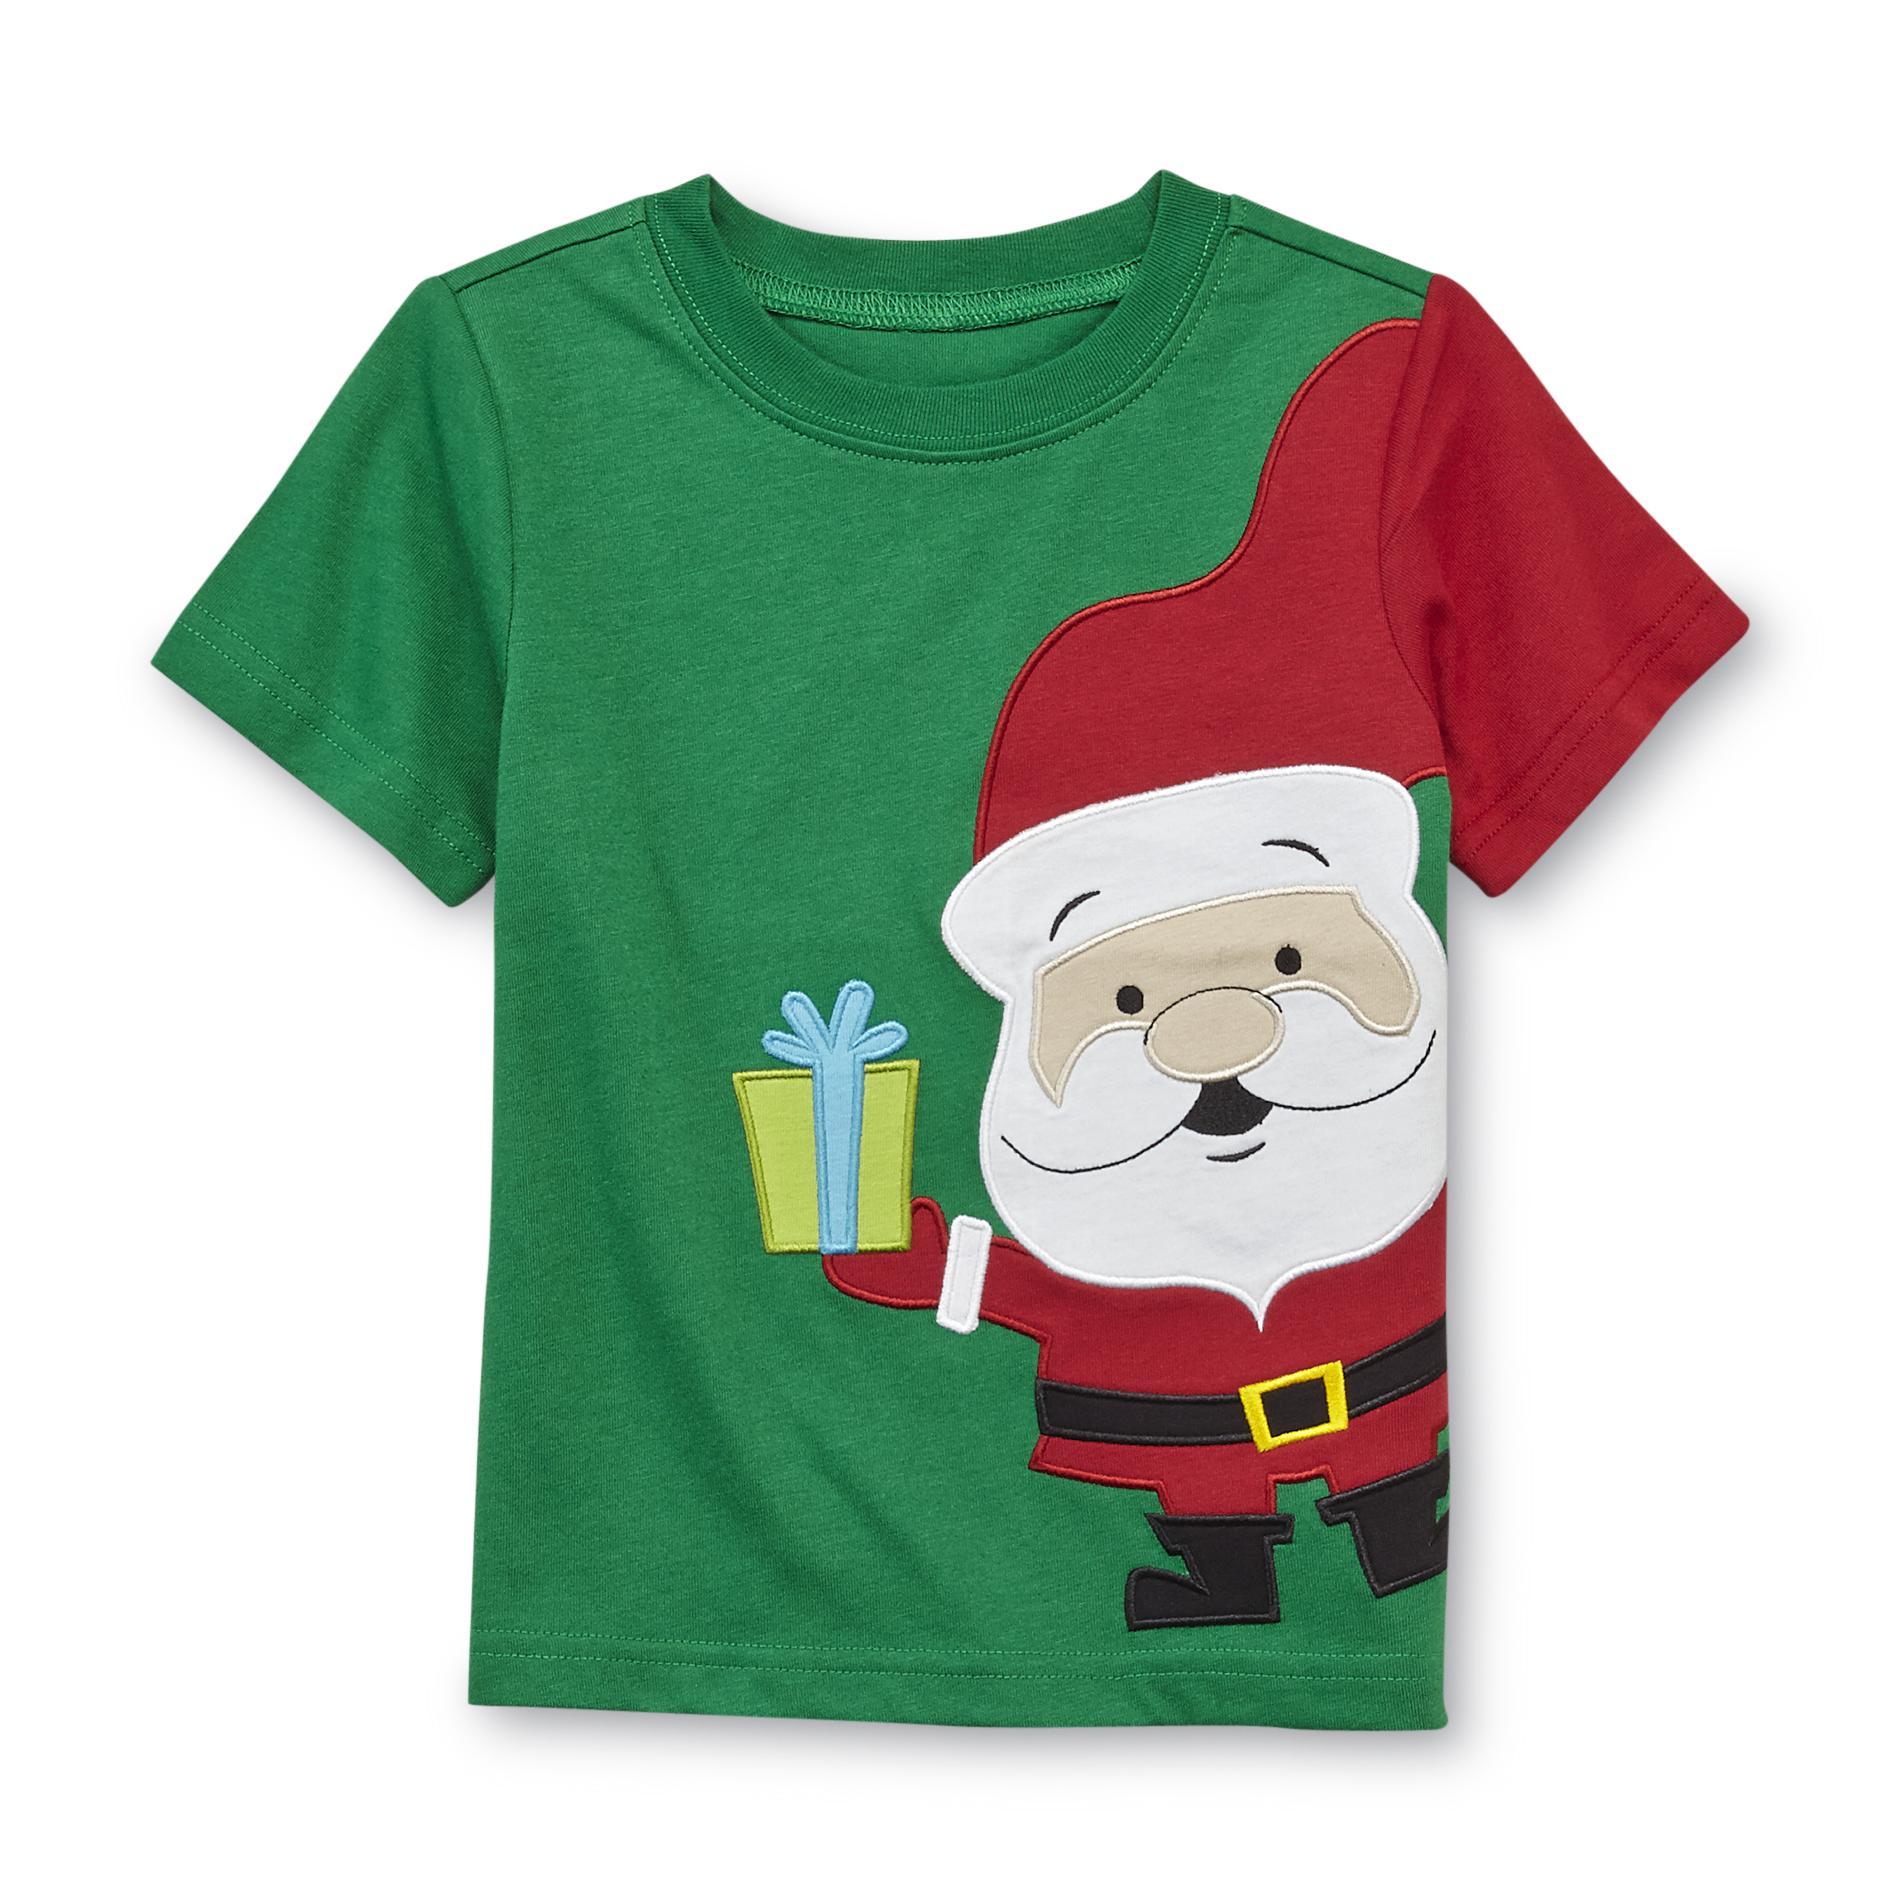 WonderKids Infant & Toddler Boy's Christmas Graphic T-Shirt - Santa Claus